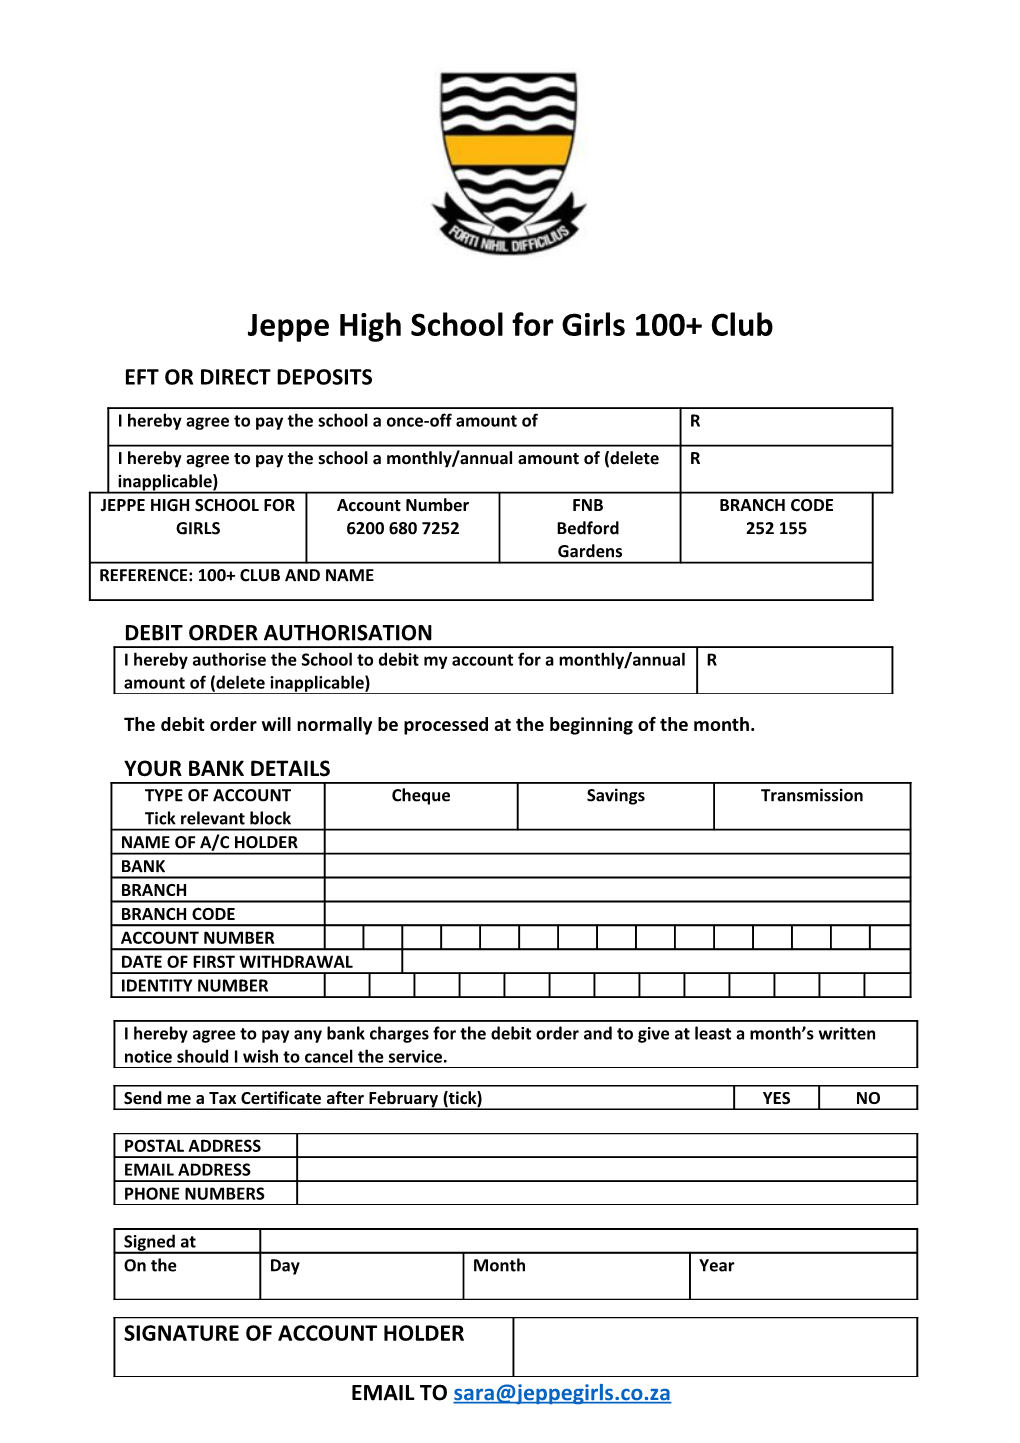 Jeppe High School for Girls 100+ Club